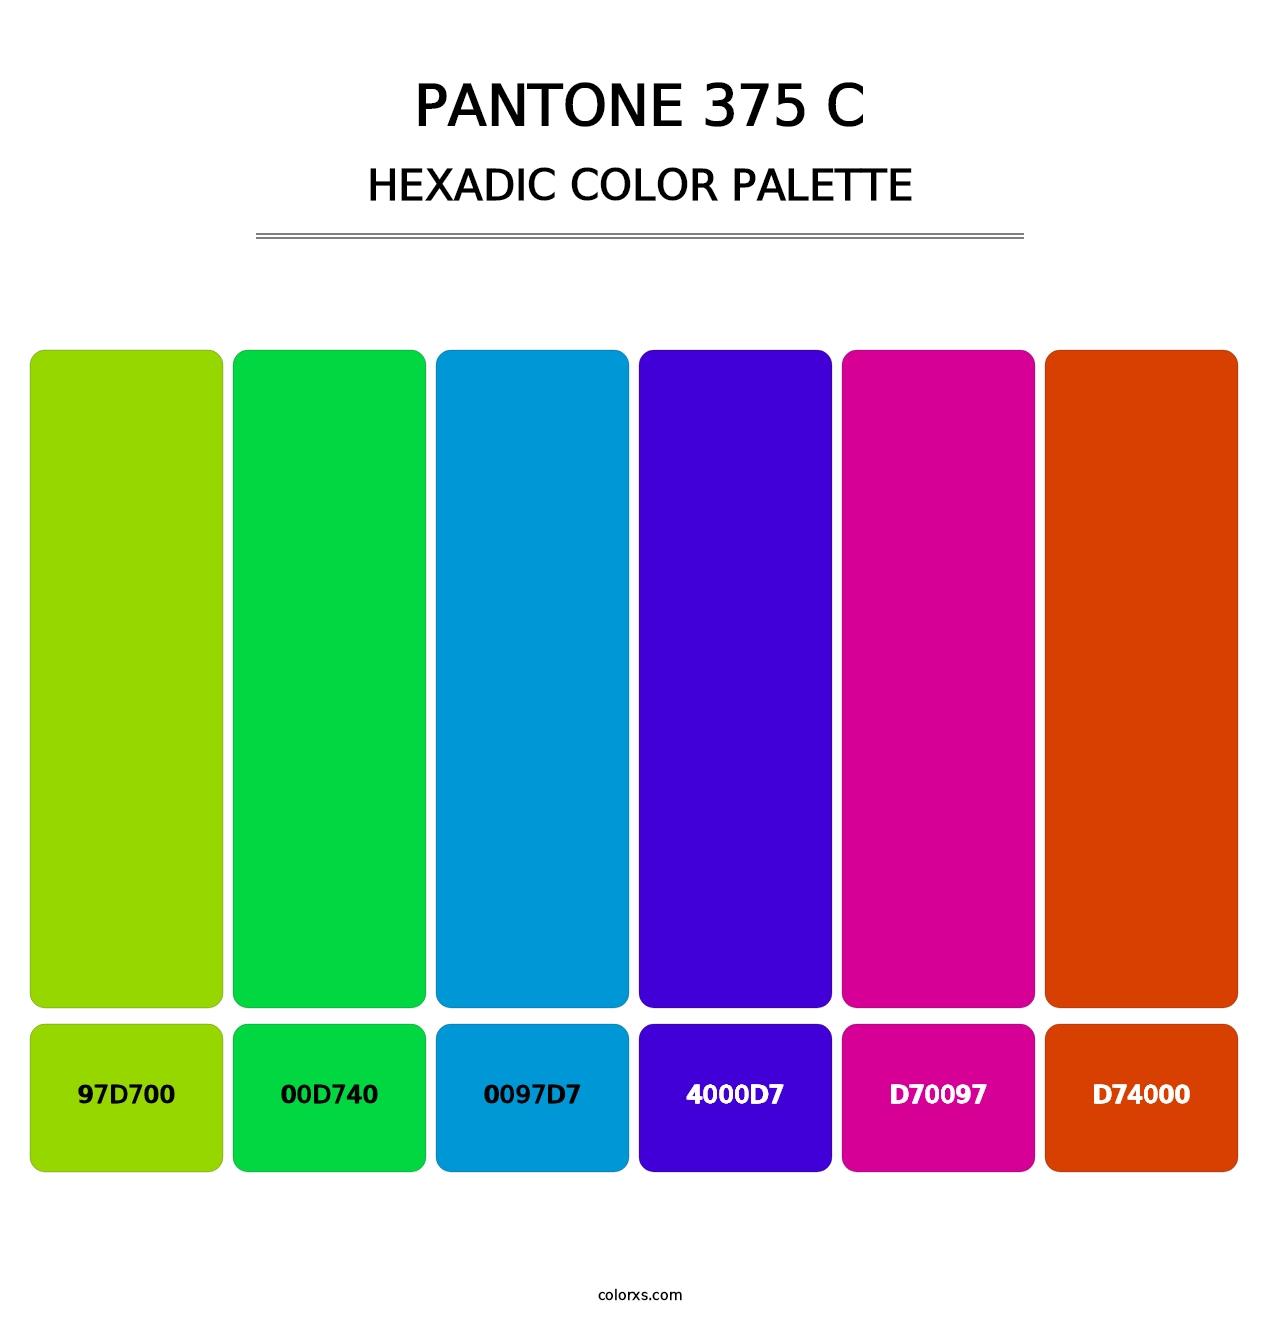 PANTONE 375 C - Hexadic Color Palette